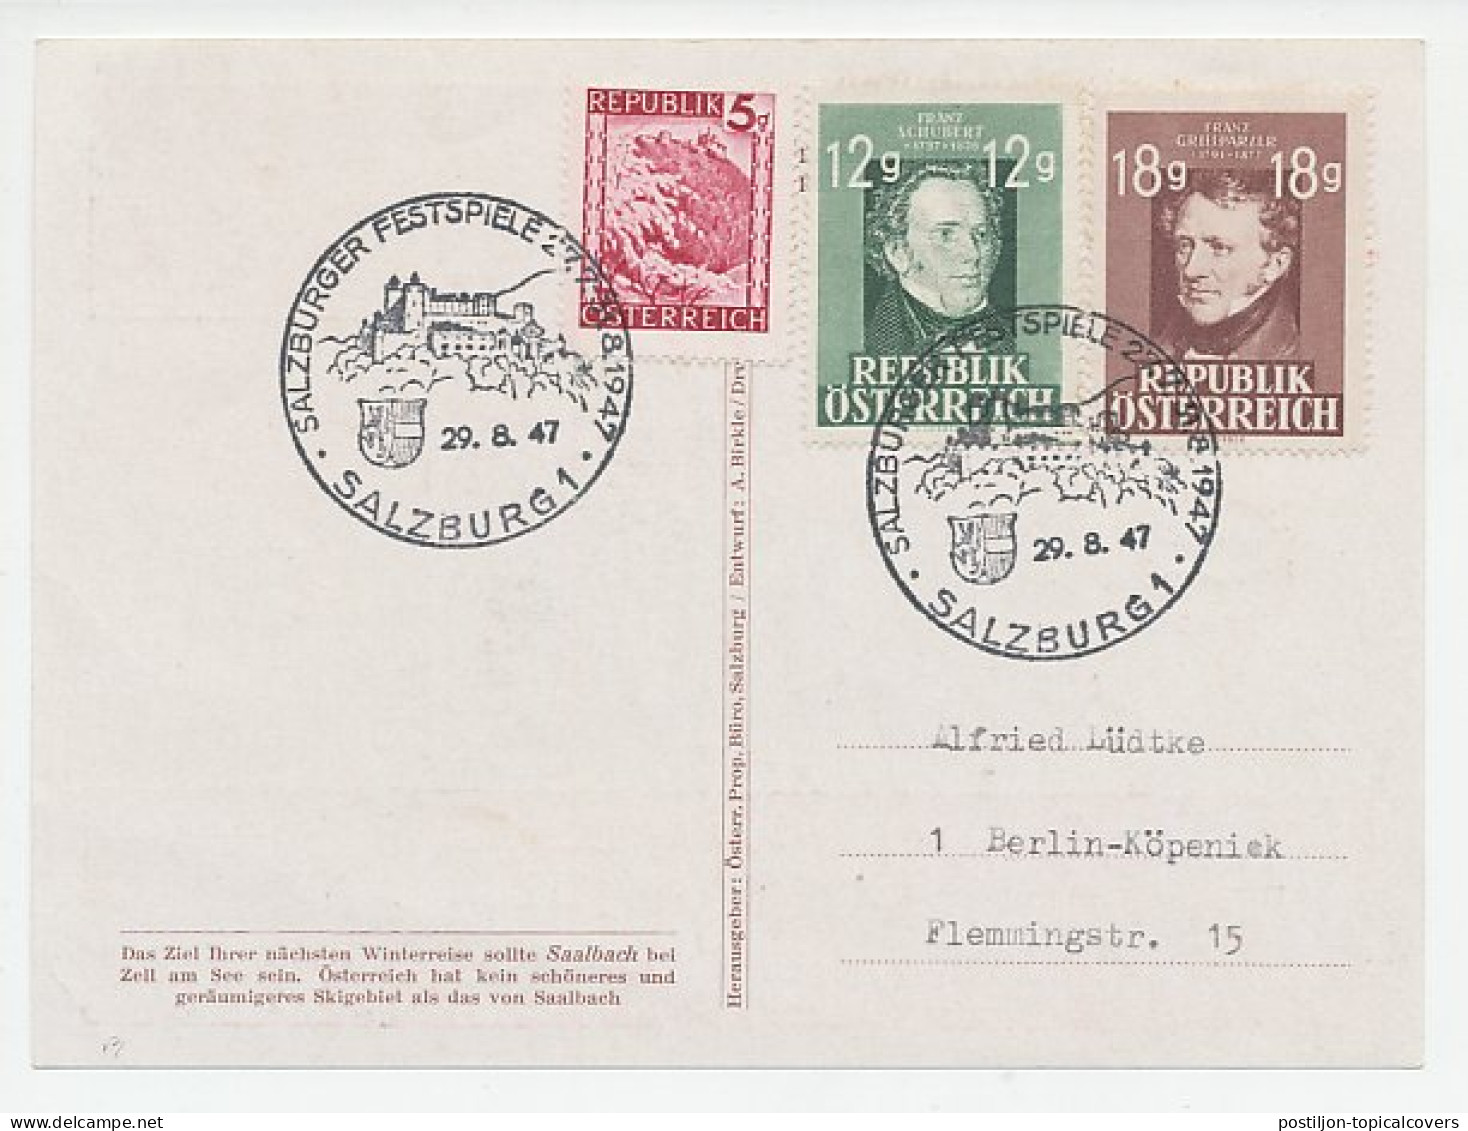 Card / Postmark Austria 1947 Salzburger Festival - Musique